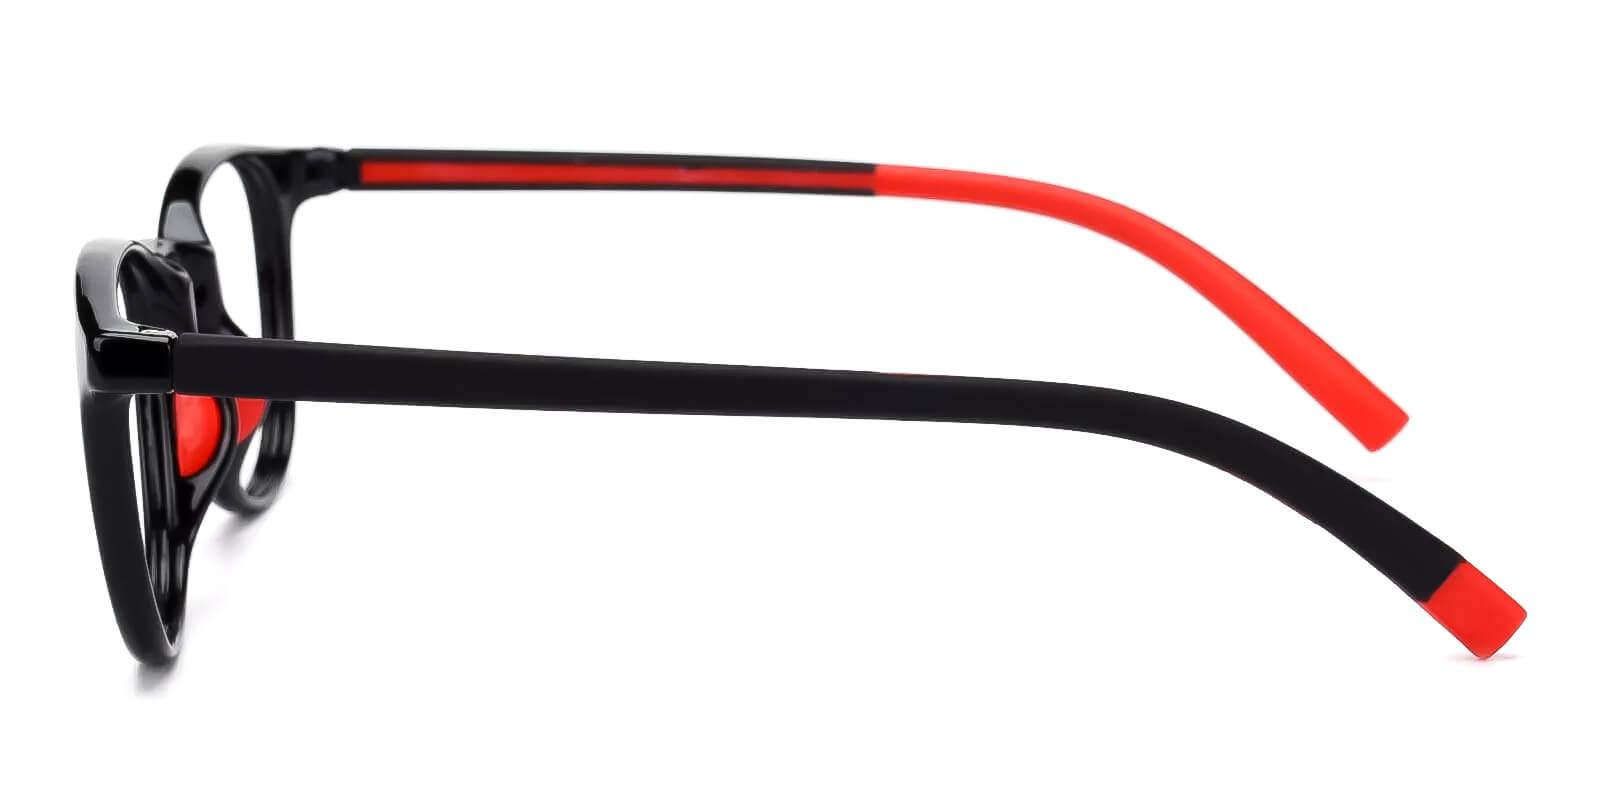 Kids-Experience Red Plastic Eyeglasses , Fashion , UniversalBridgeFit Frames from ABBE Glasses